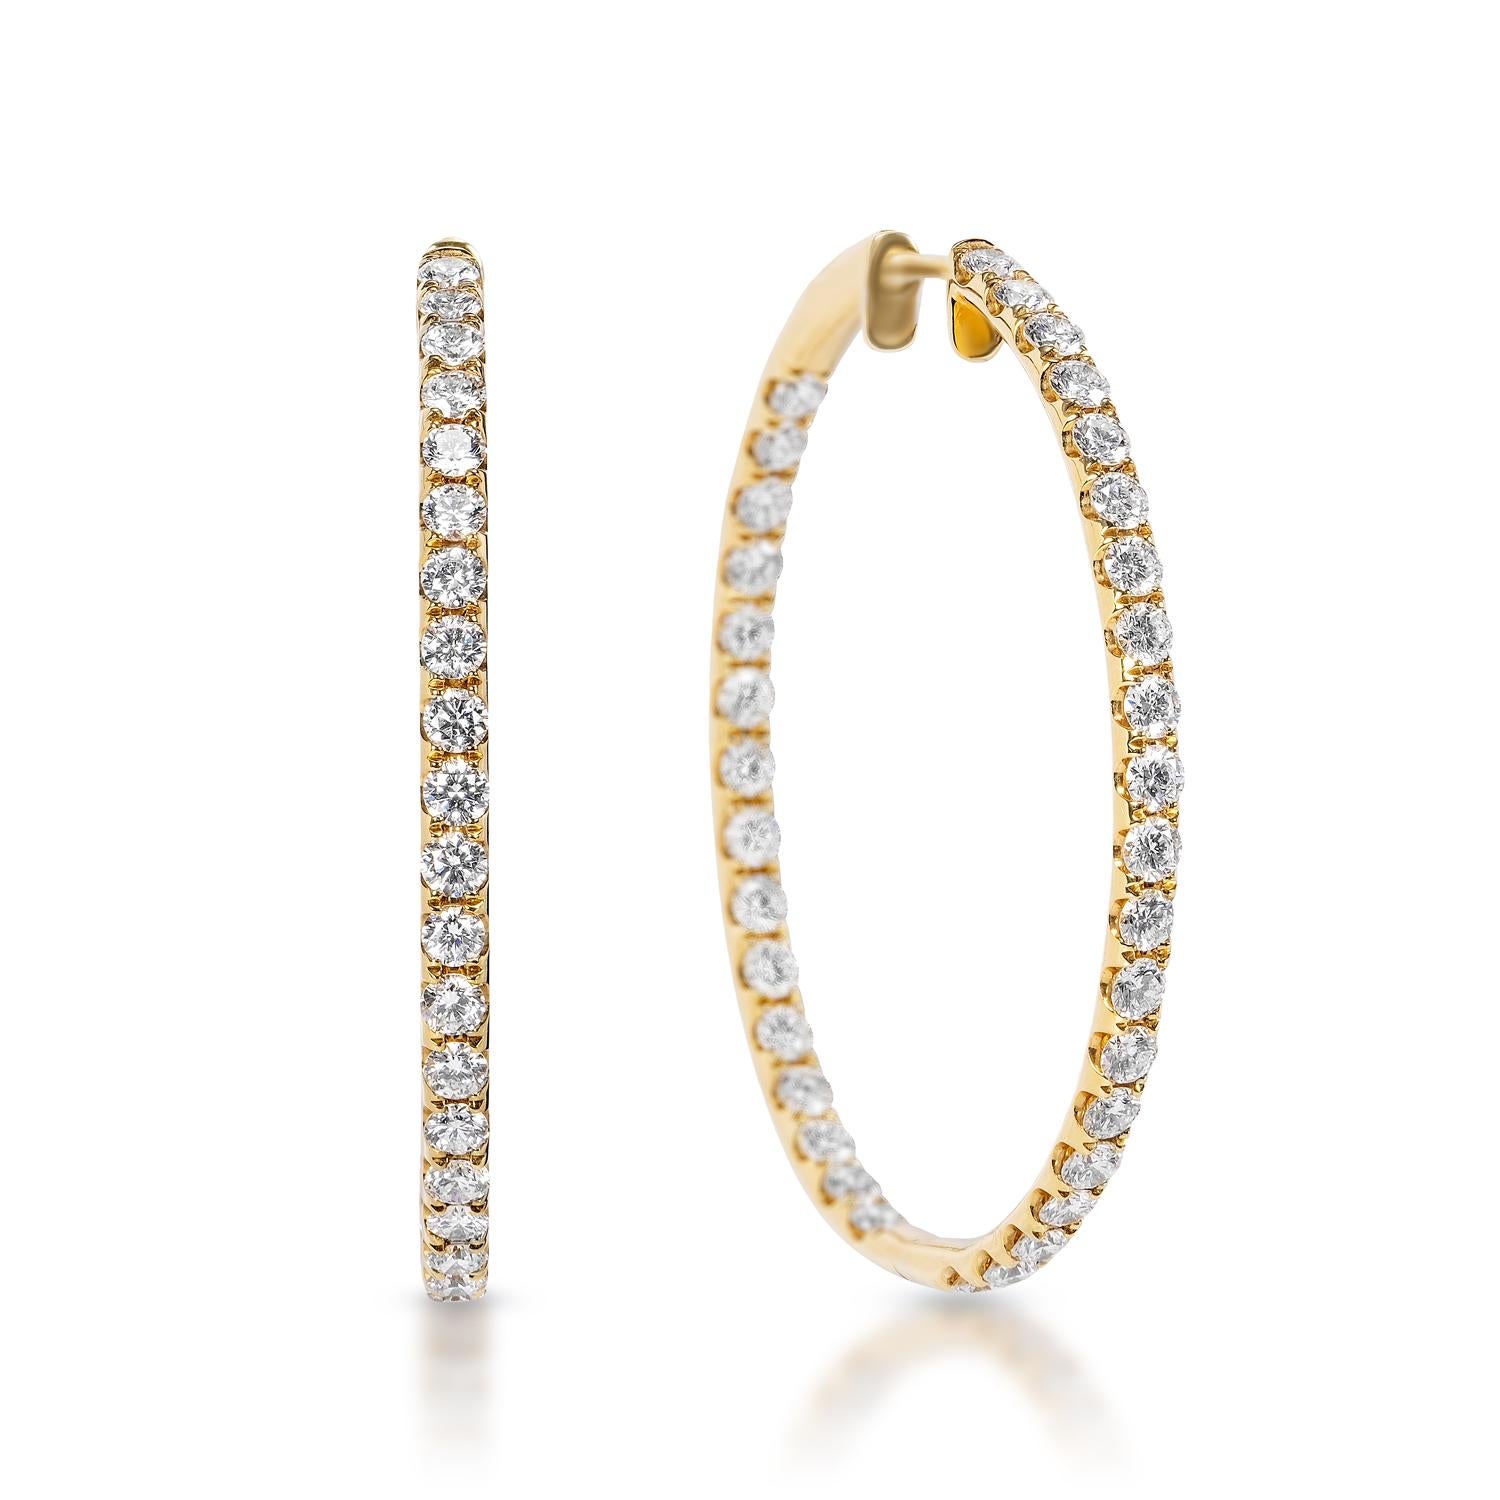 Diamond Hoop Earrings:

Carat Weight: 3.70 Carats
Shape: Round Brilliant Cut
Metal: 14 Karat Yellow Gold
Style: Hoop Earrings